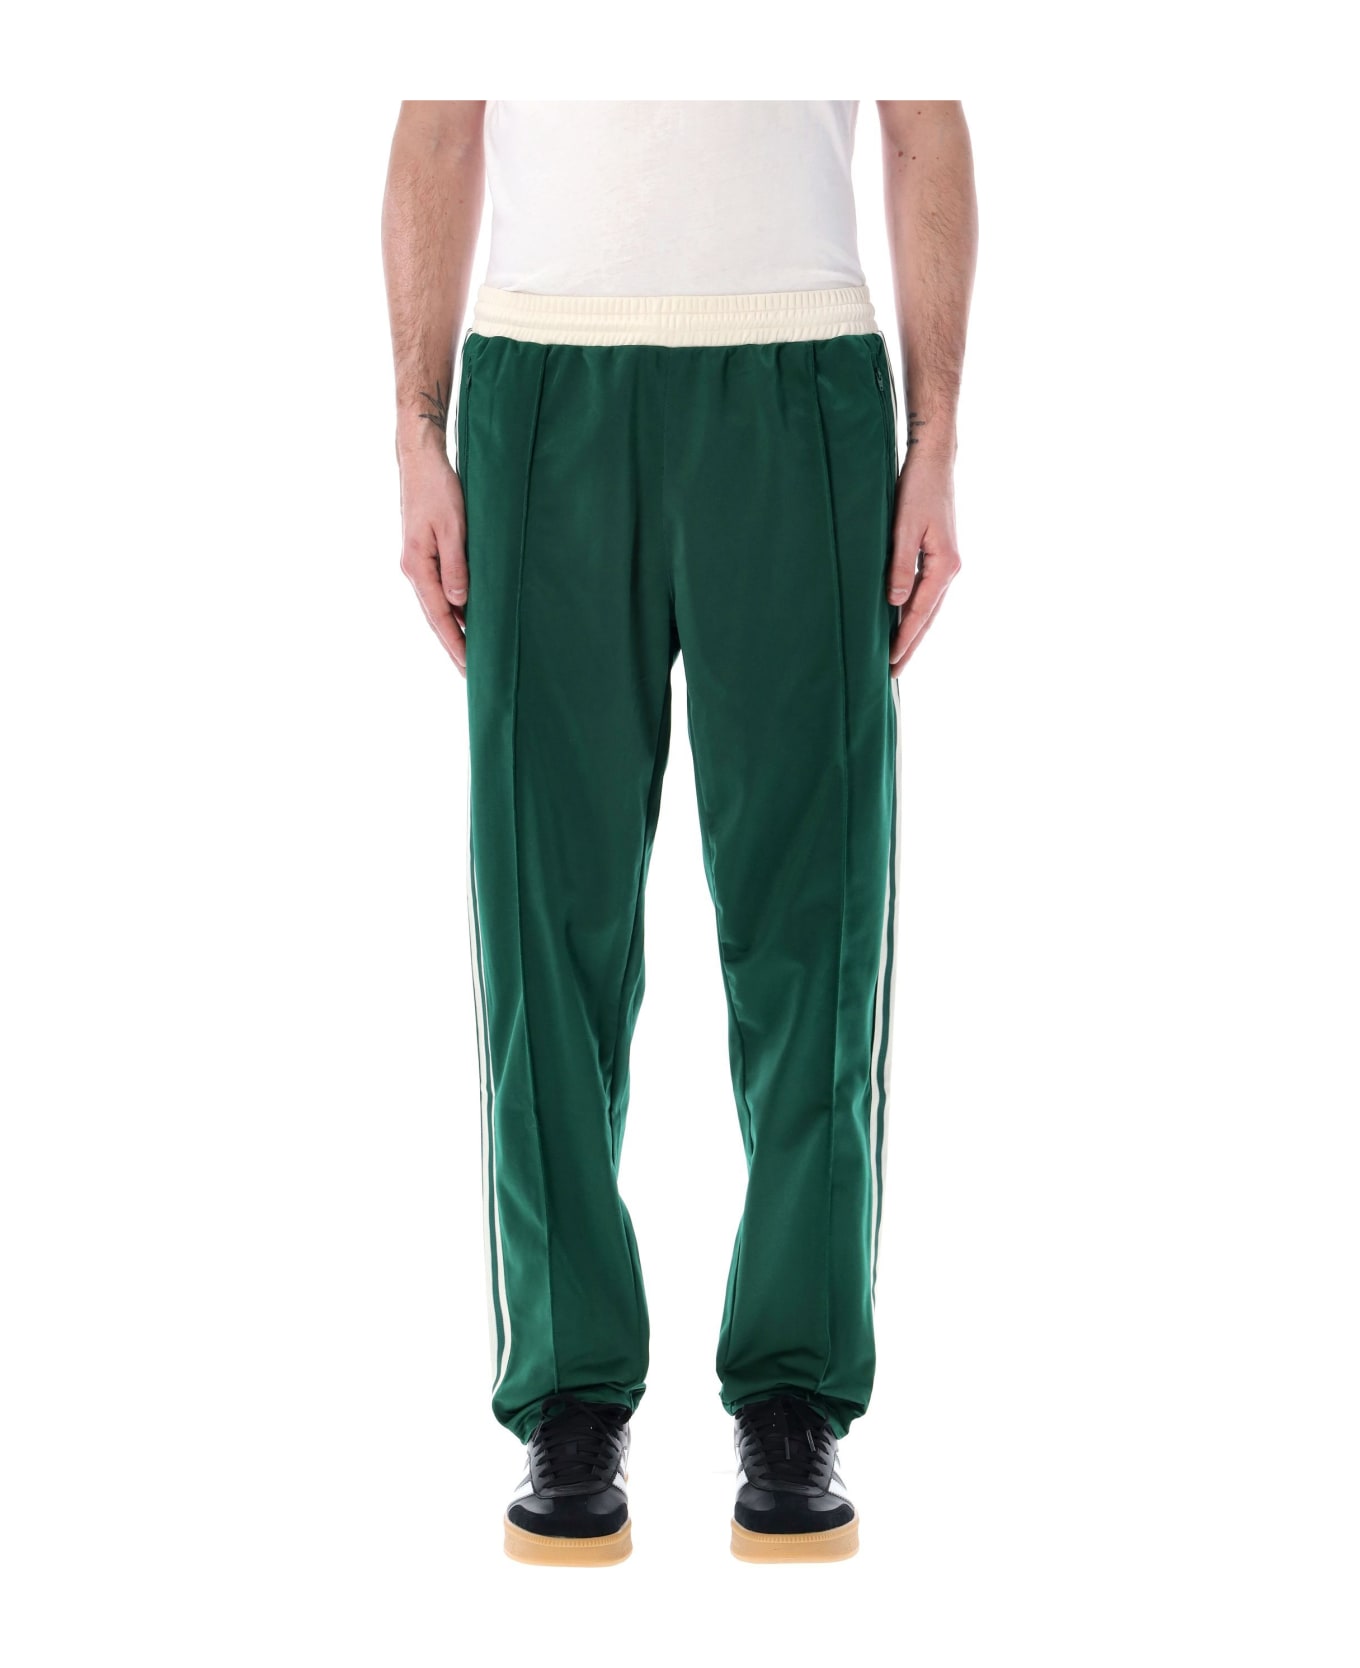 Adidas Originals Sst Track Pants - WHITE/GREEN スウェットパンツ